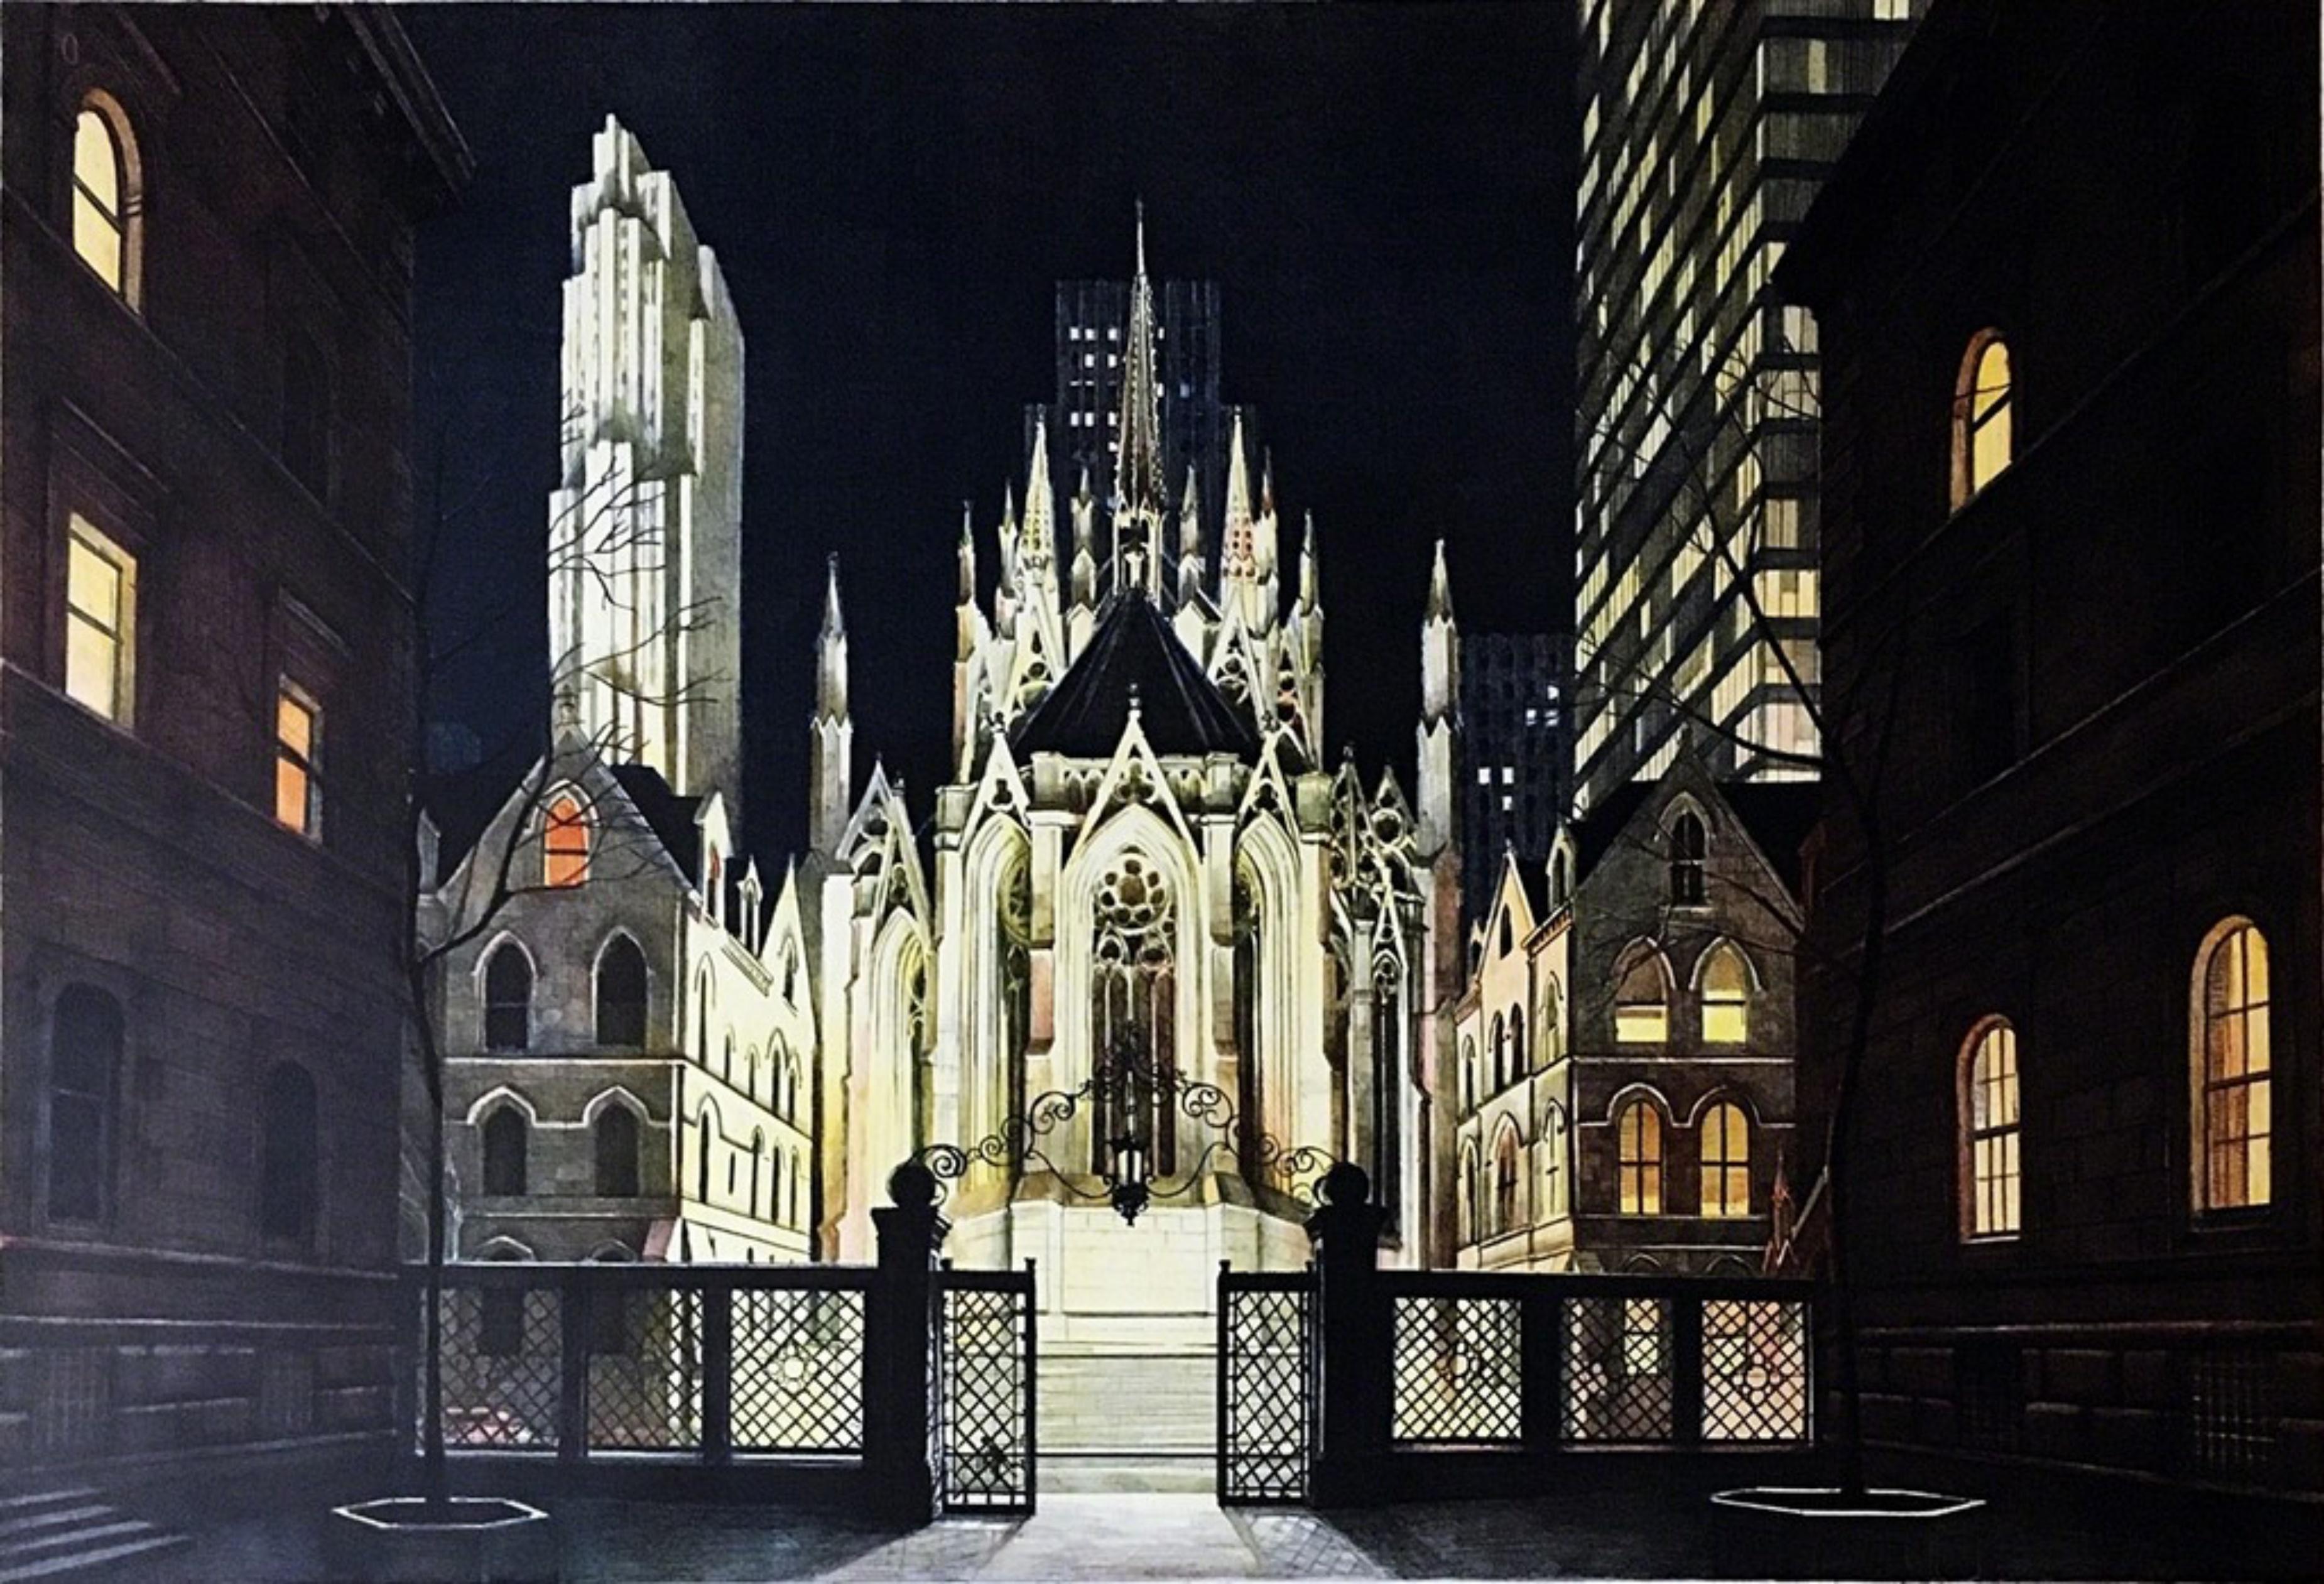 Courtyard Villard, cathédrale St. Patrick's, New York - Print de Richard Haas